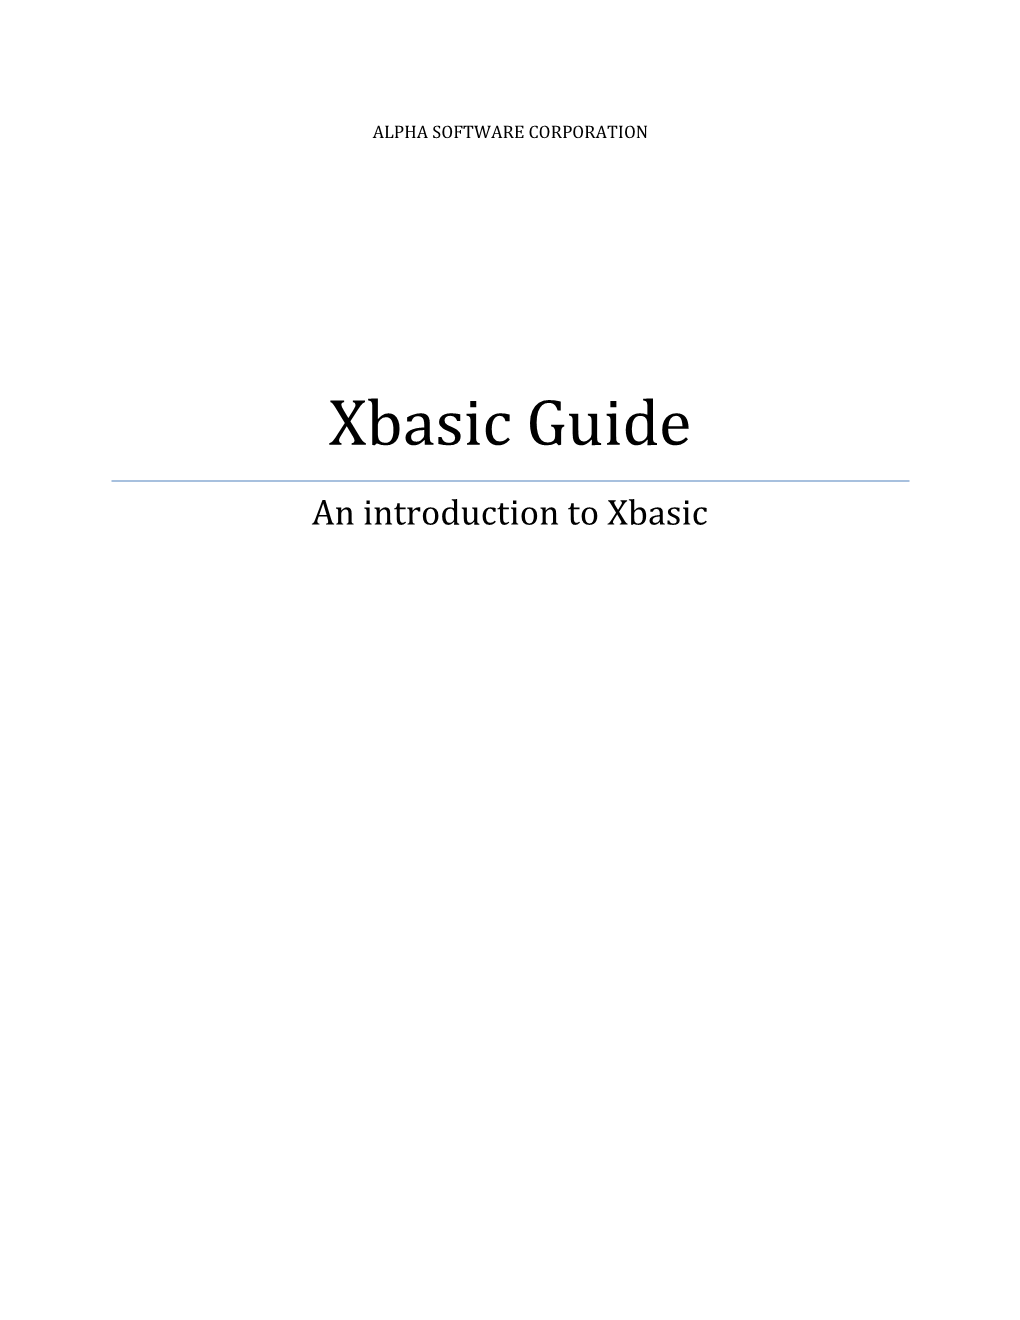 Xbasic Guide